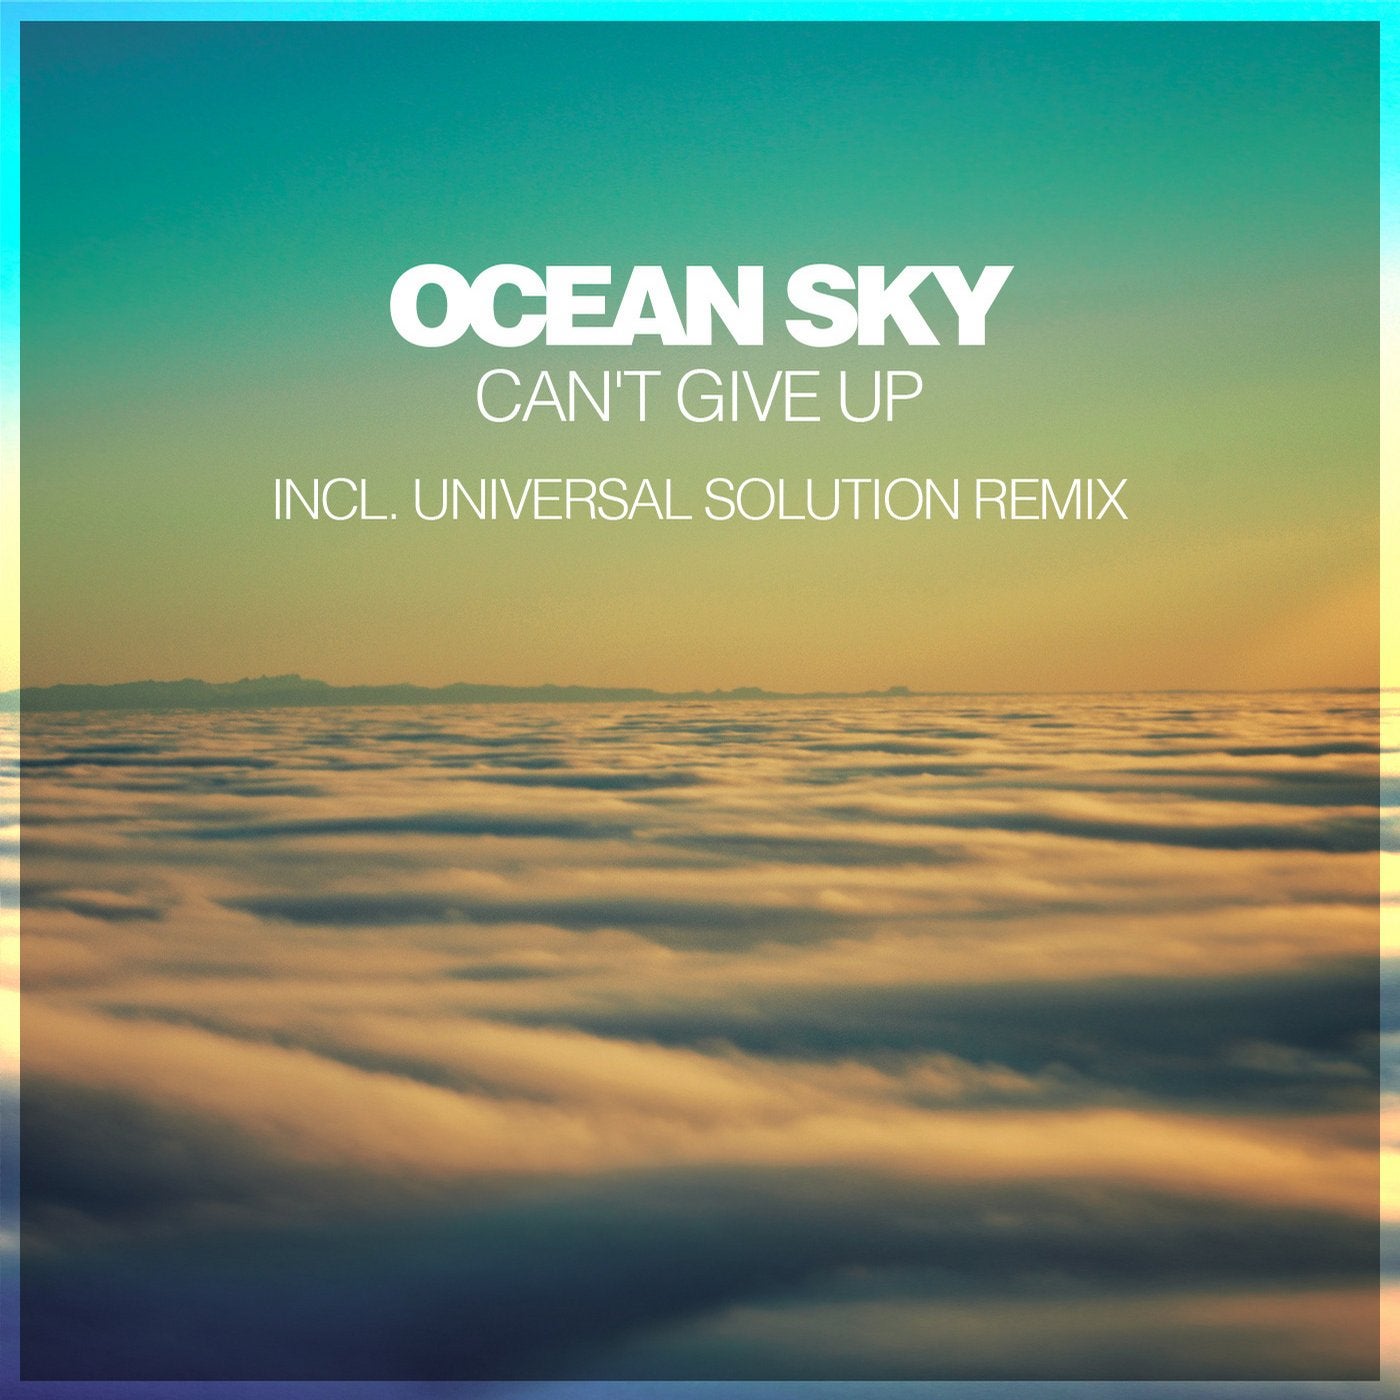 Universal solution. Man Ocean Sky. Океан небо песня. Music Producer Ocean.